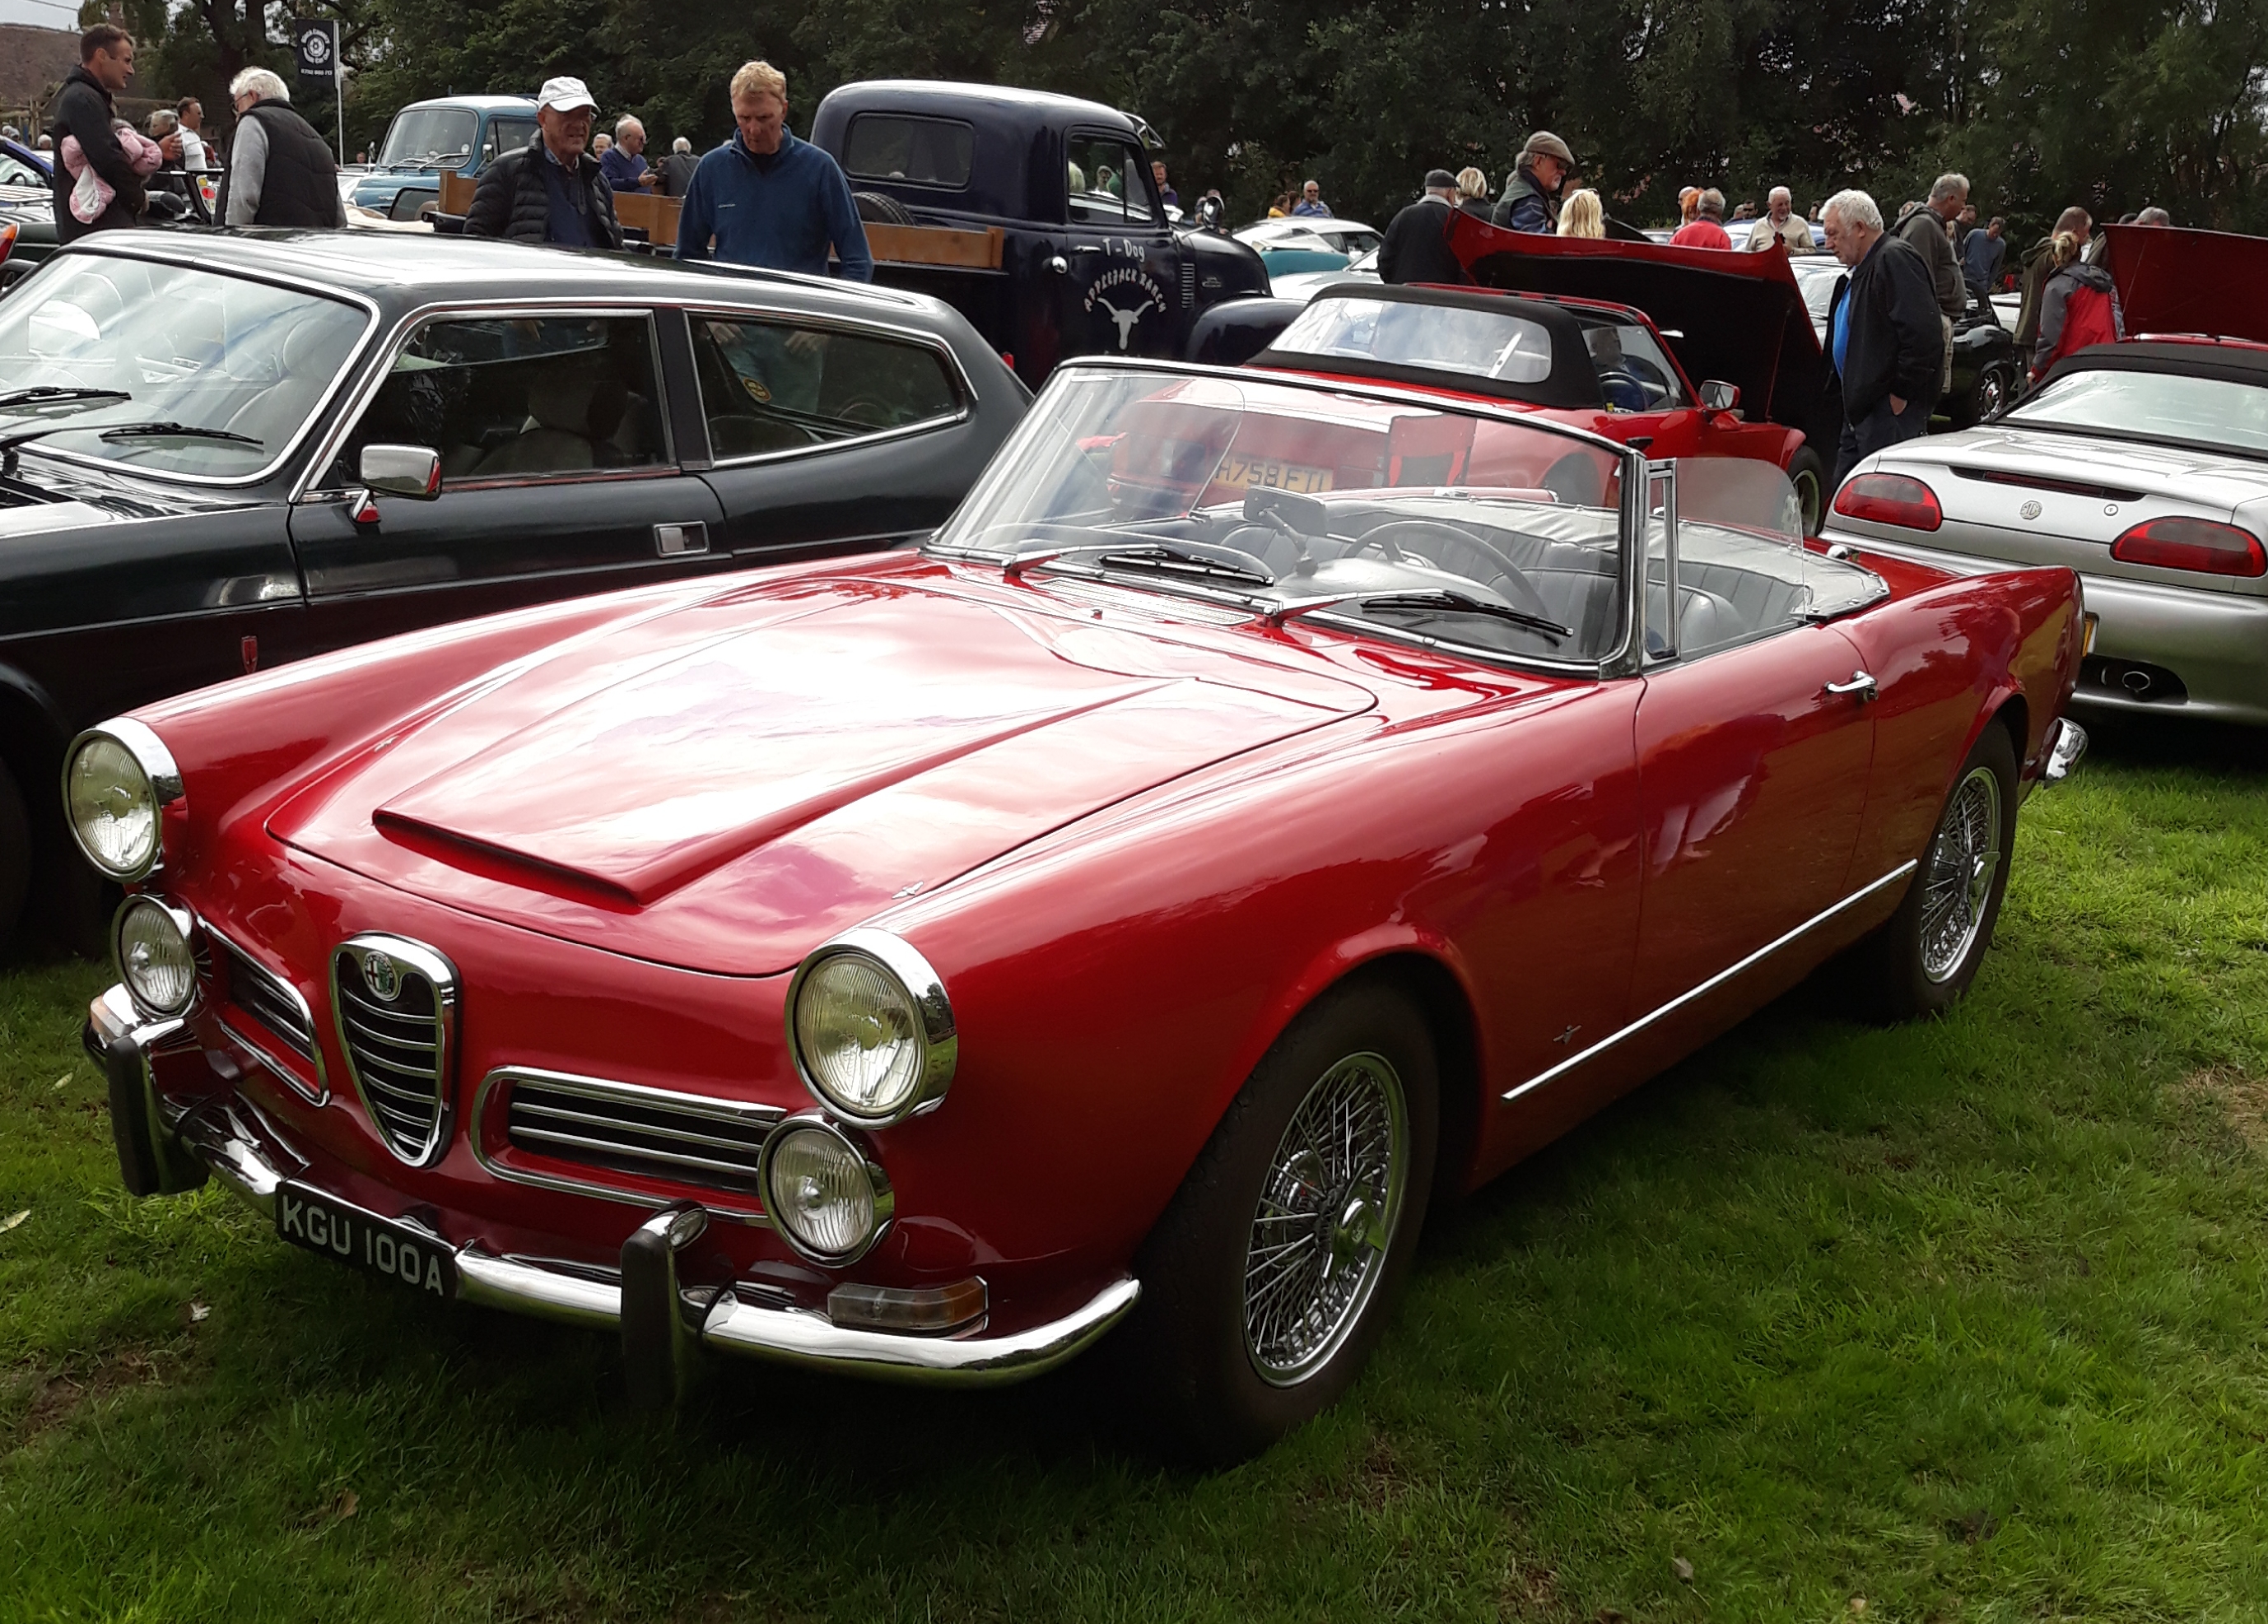 2nd prize. 1962 Alfa Romeo 2600